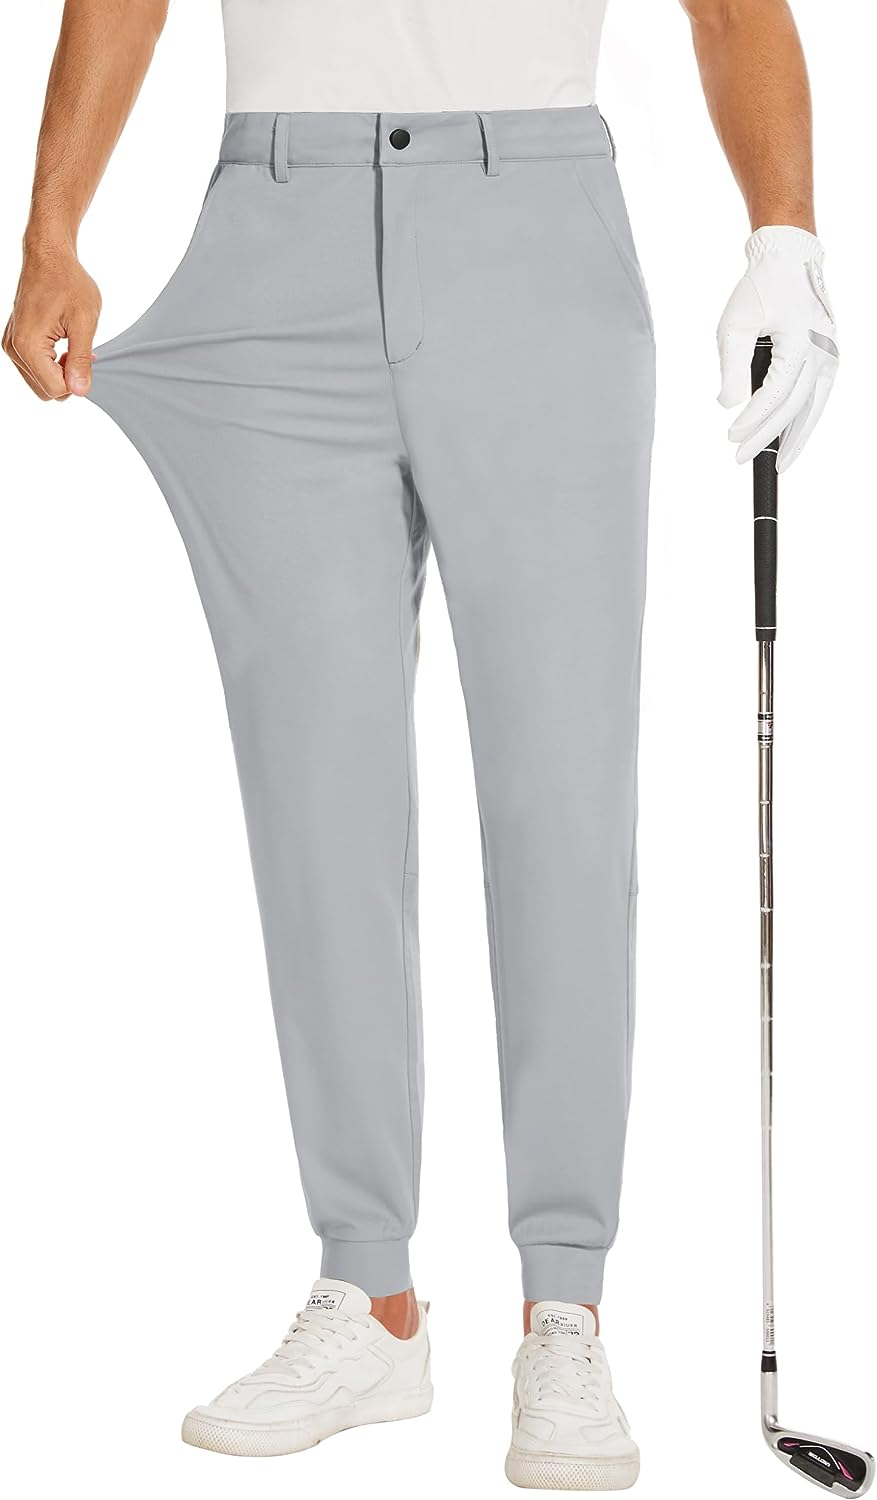 JIM LEAGUE Men's Golf Joggers Pants Belt Loops Slim Fit Stretchy Sweatpants  Work